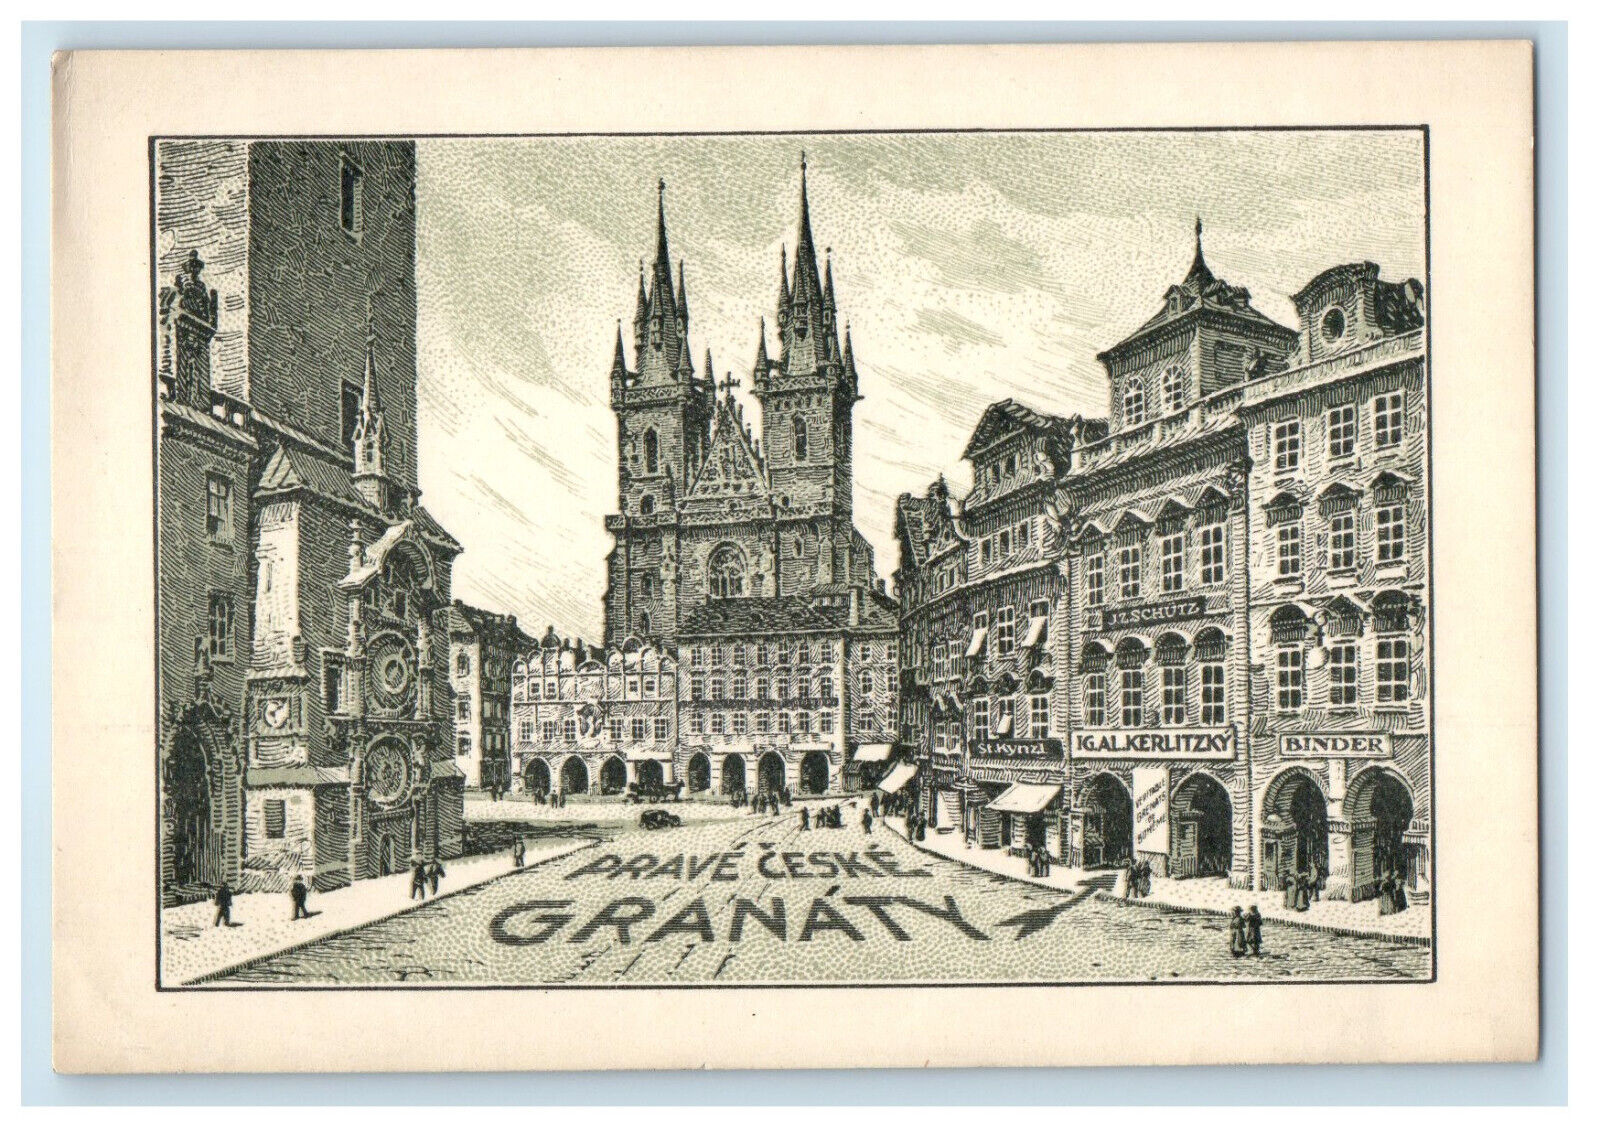 c1920s Garnet Shop Praque Klenotnik IG AL Kertlizky Czech Republic Postcard